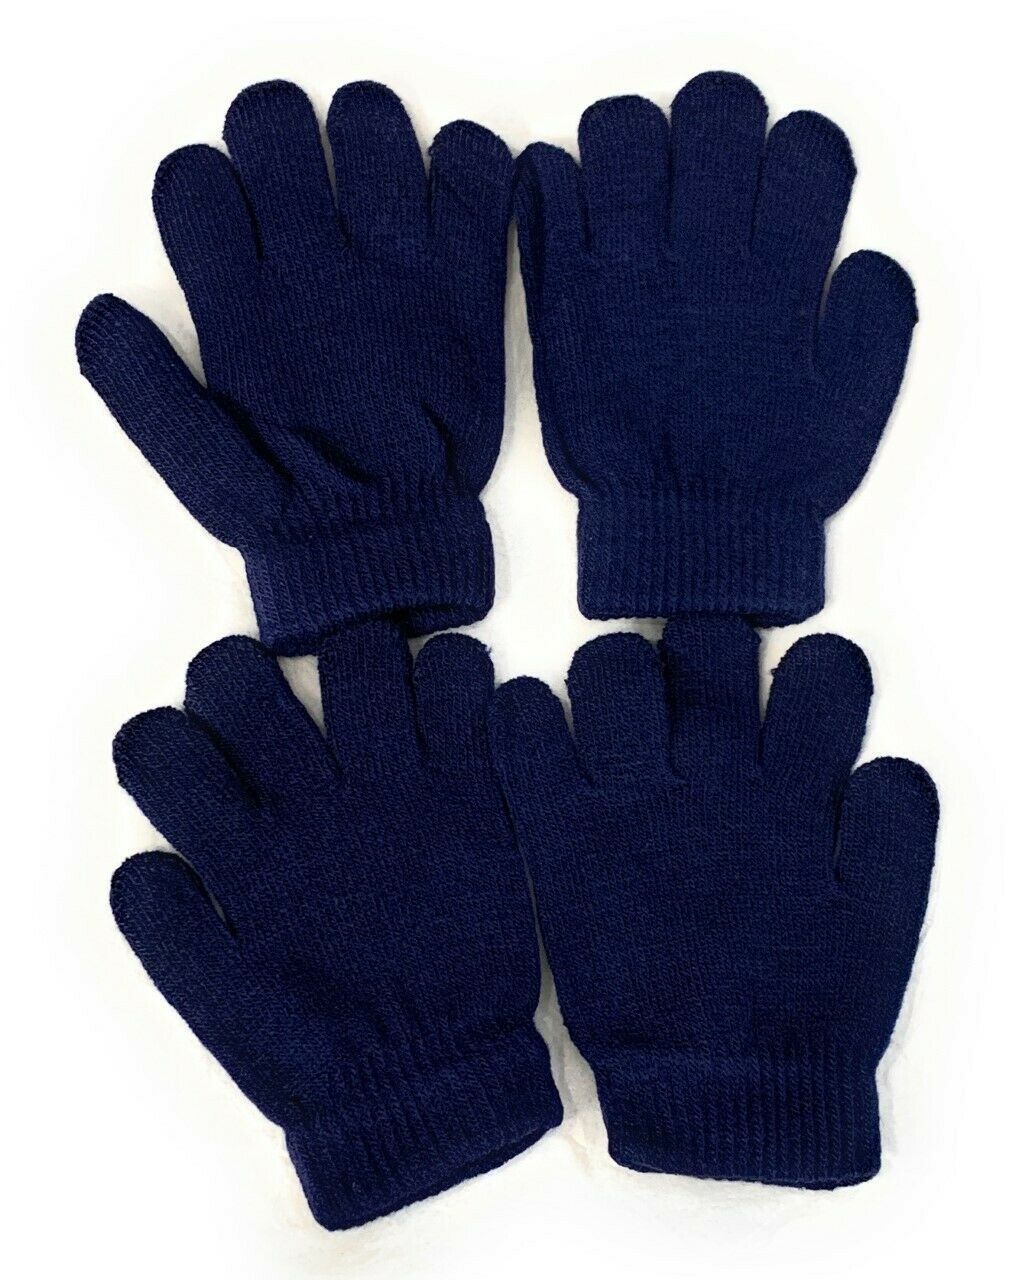 2 Pairs of Kids Children's Magic Primary School Gloves Winter Warm Stretchy UK